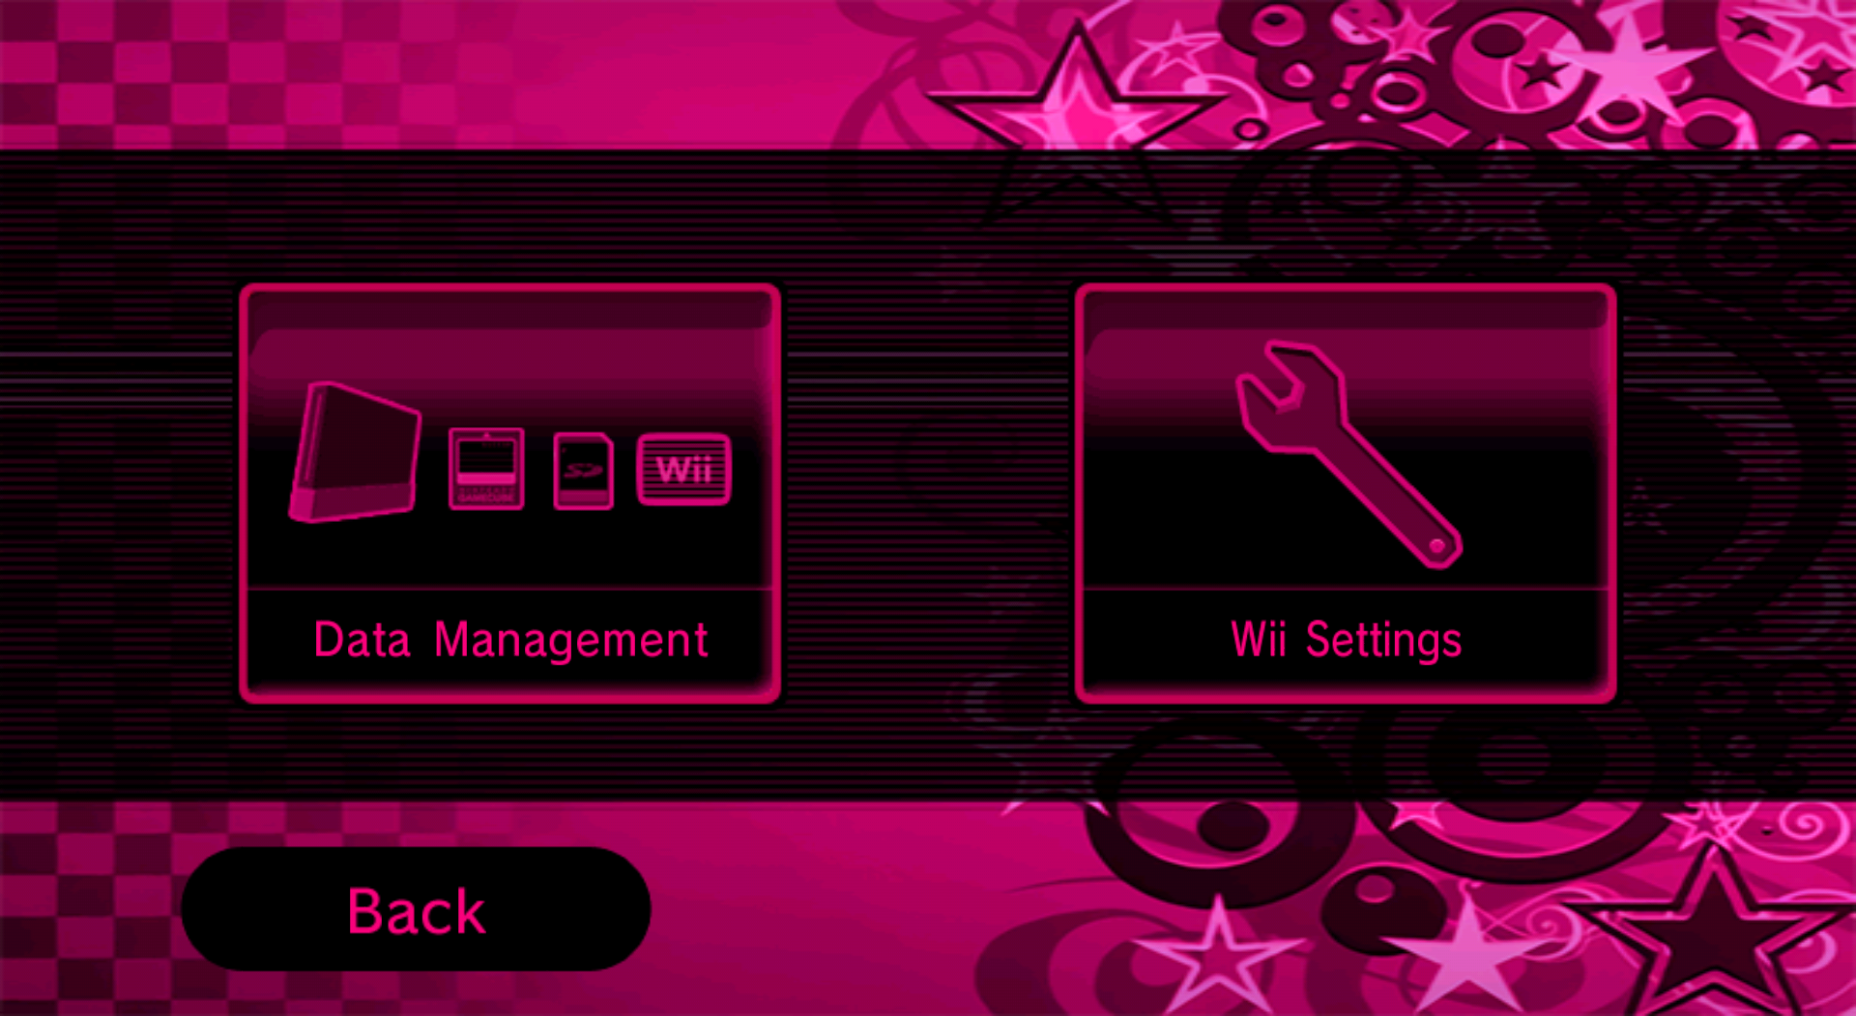 Wii Options menu - Pink